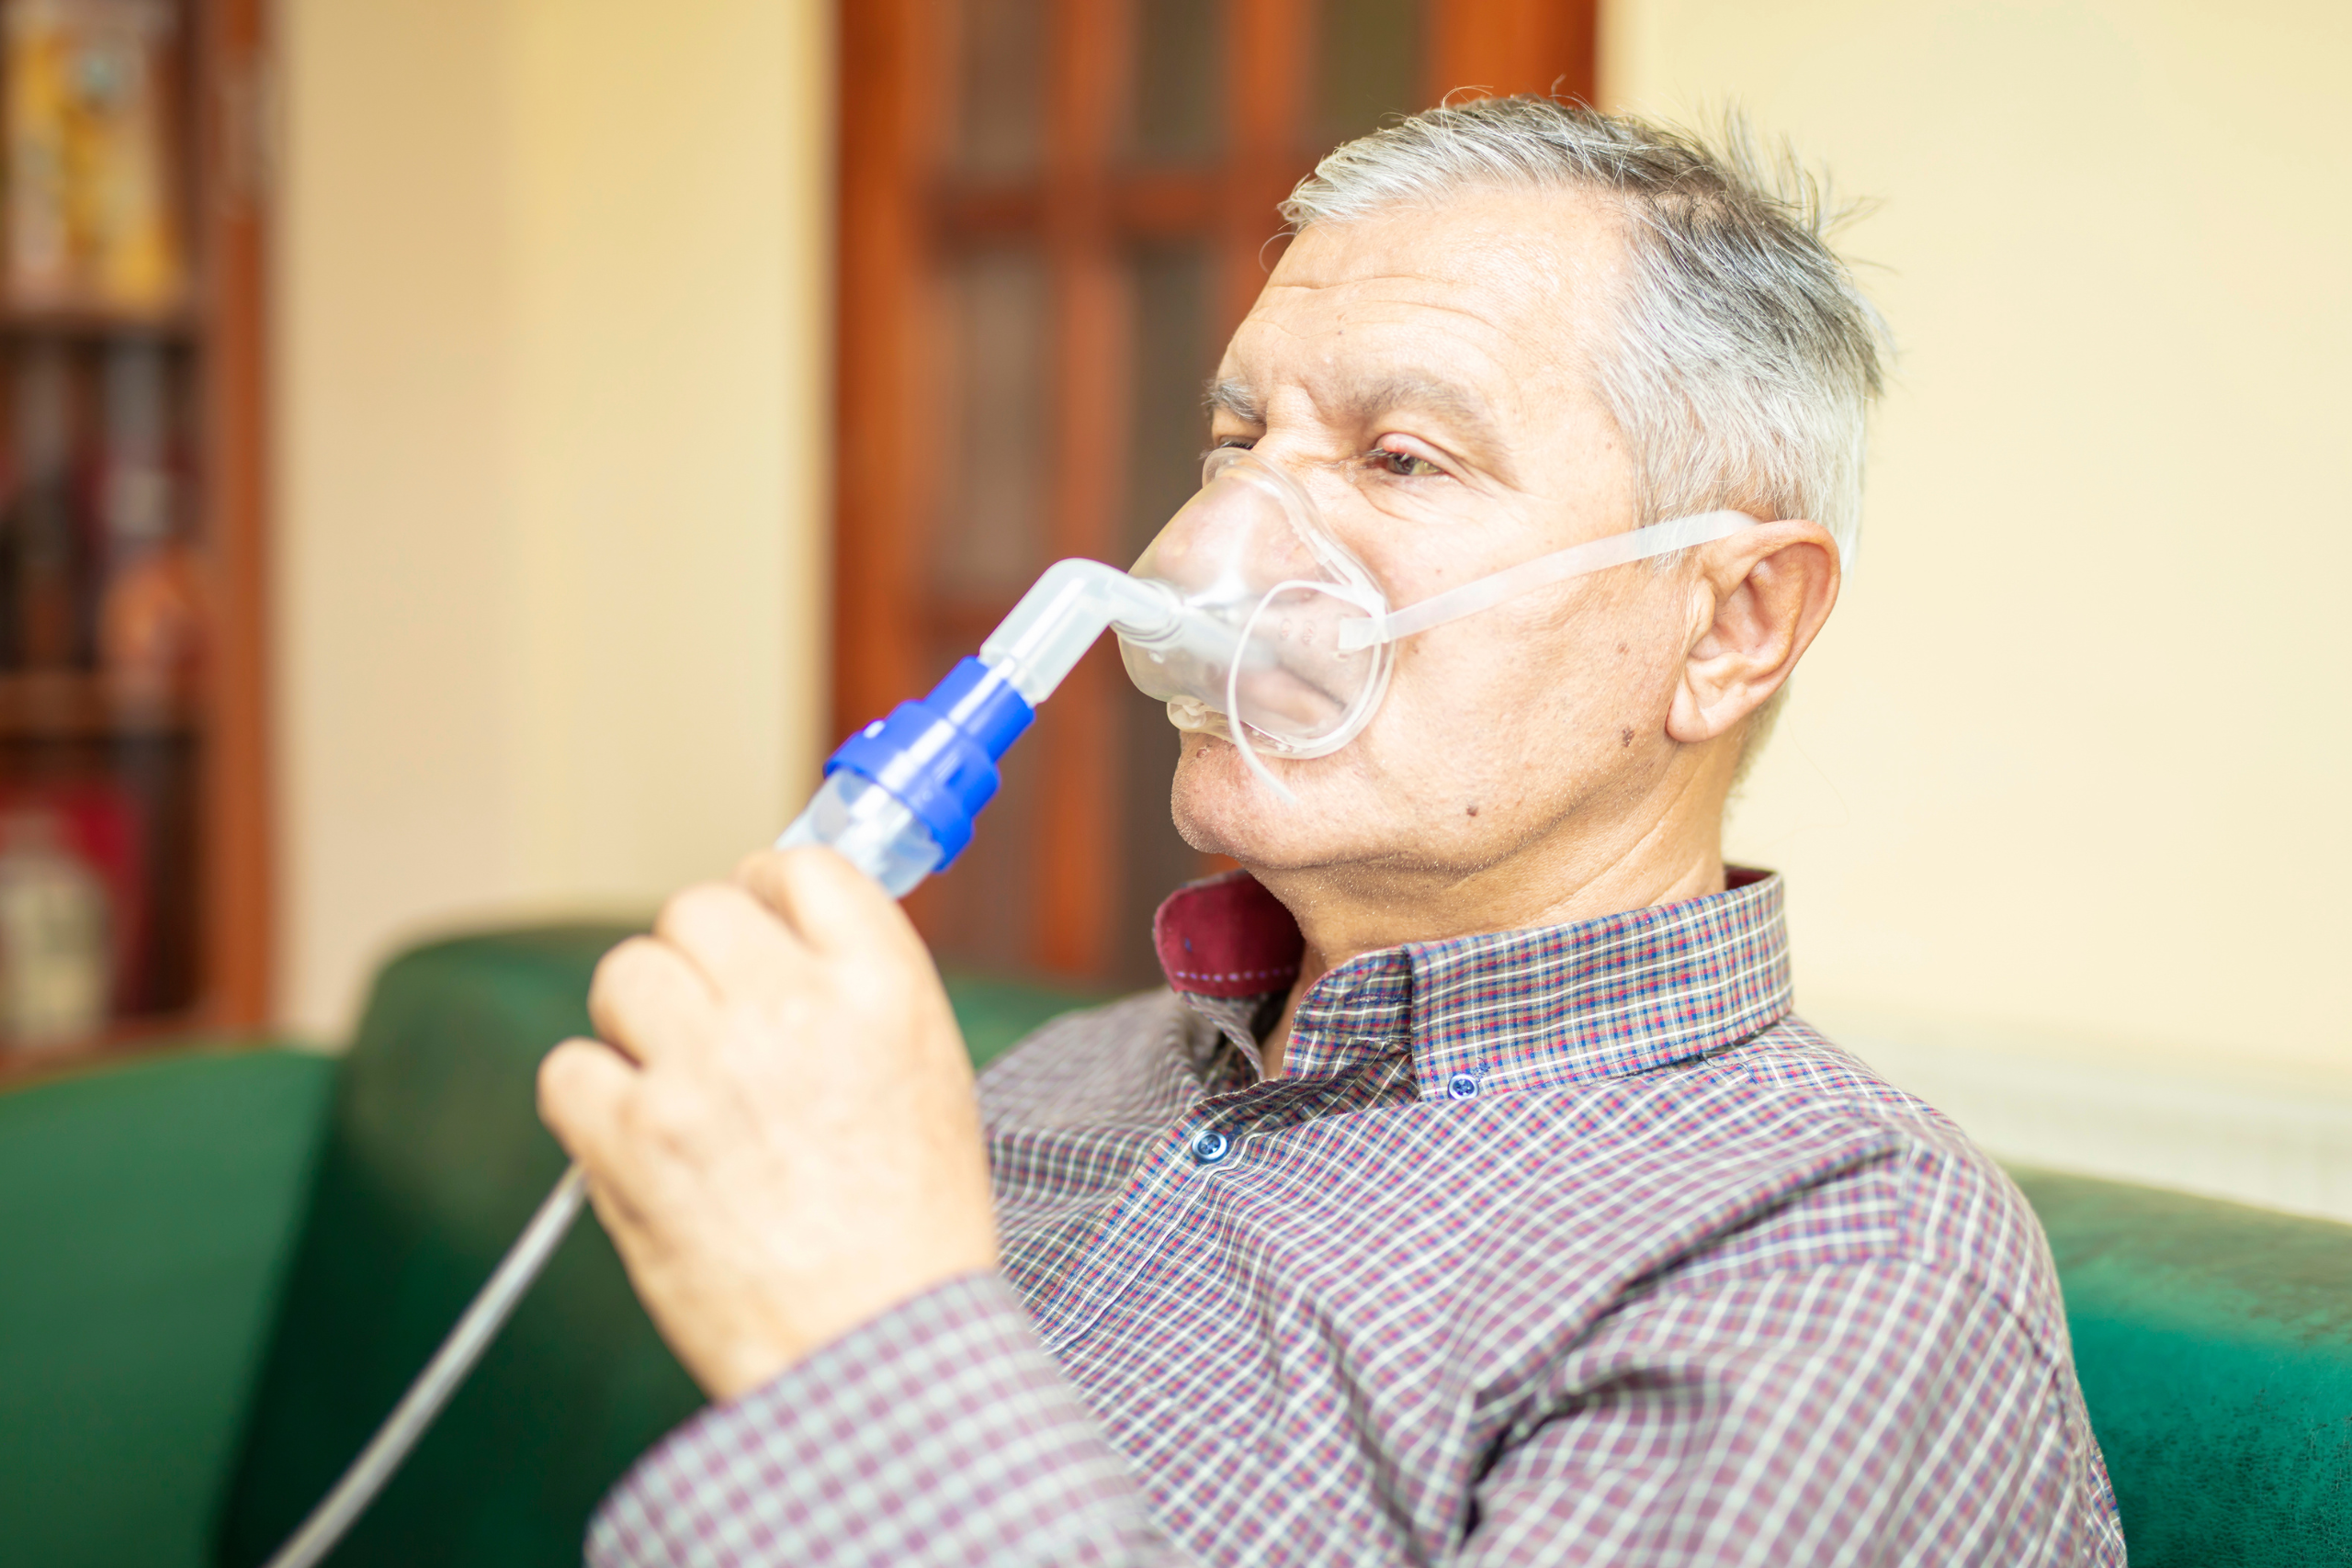 man using nebulizer